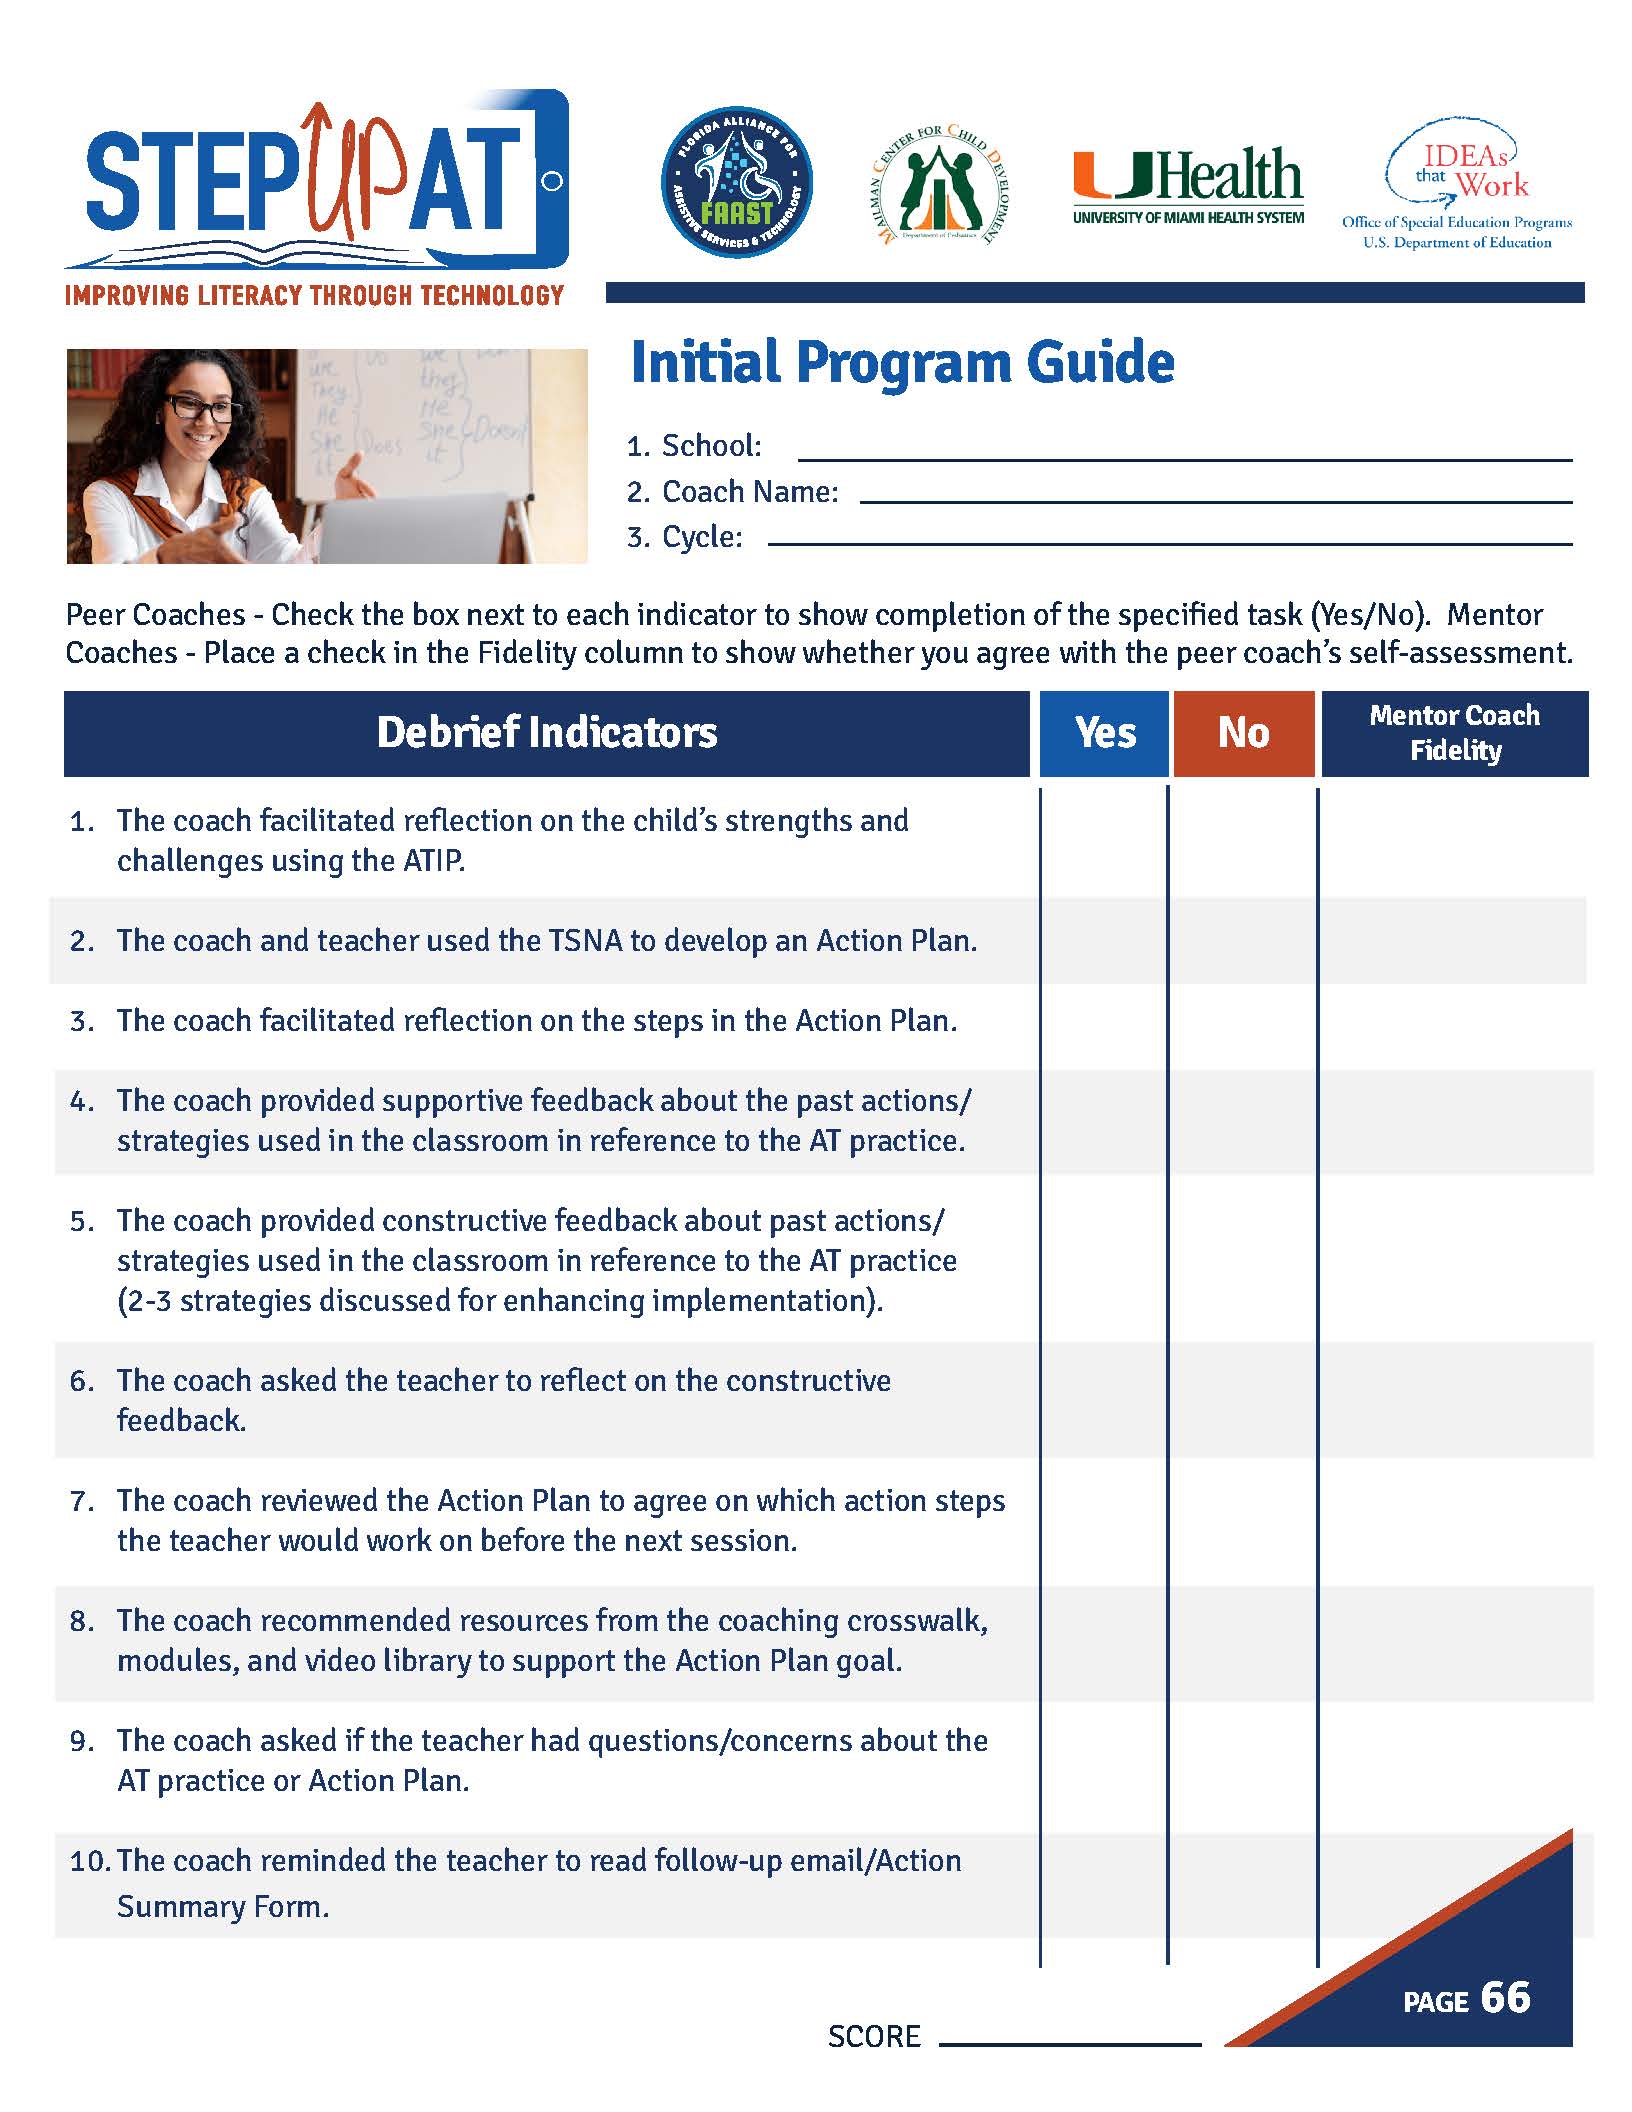 Step up AT Initial Program Guide sample